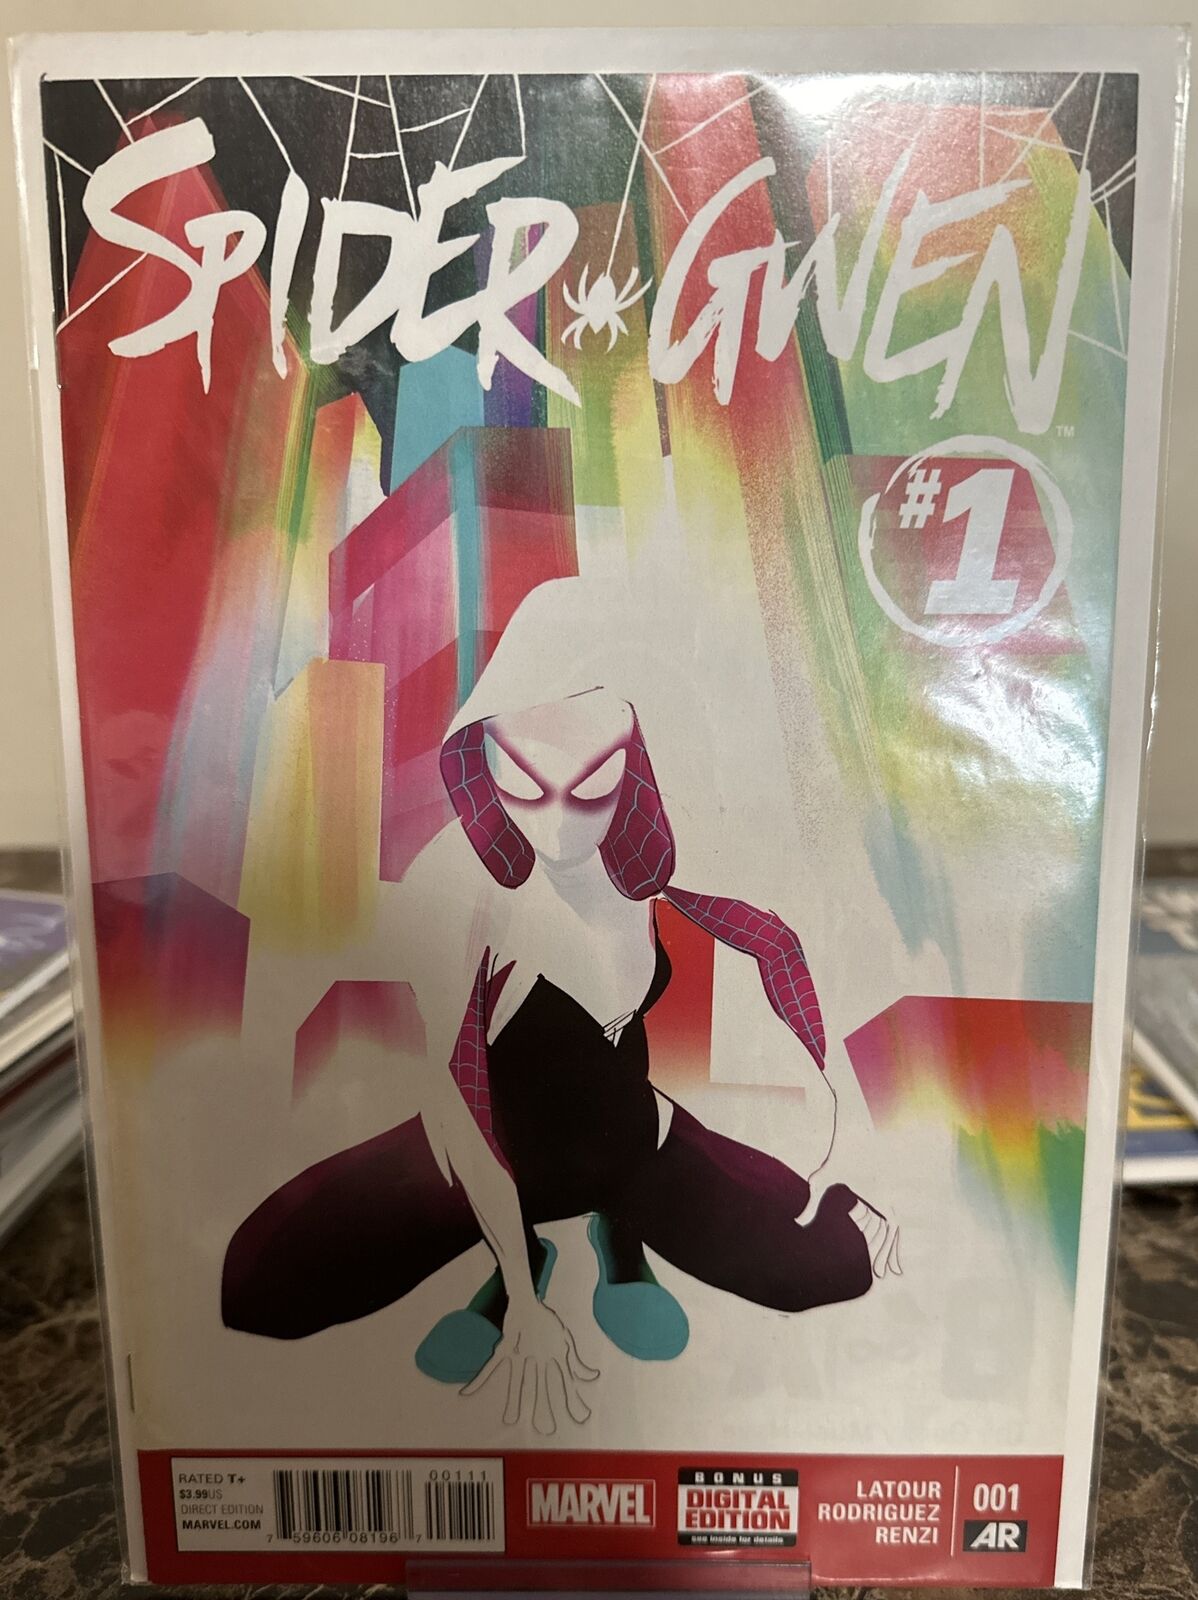 Spider-Gwen #1 (Marvel Comics April 2015) First Print NM+